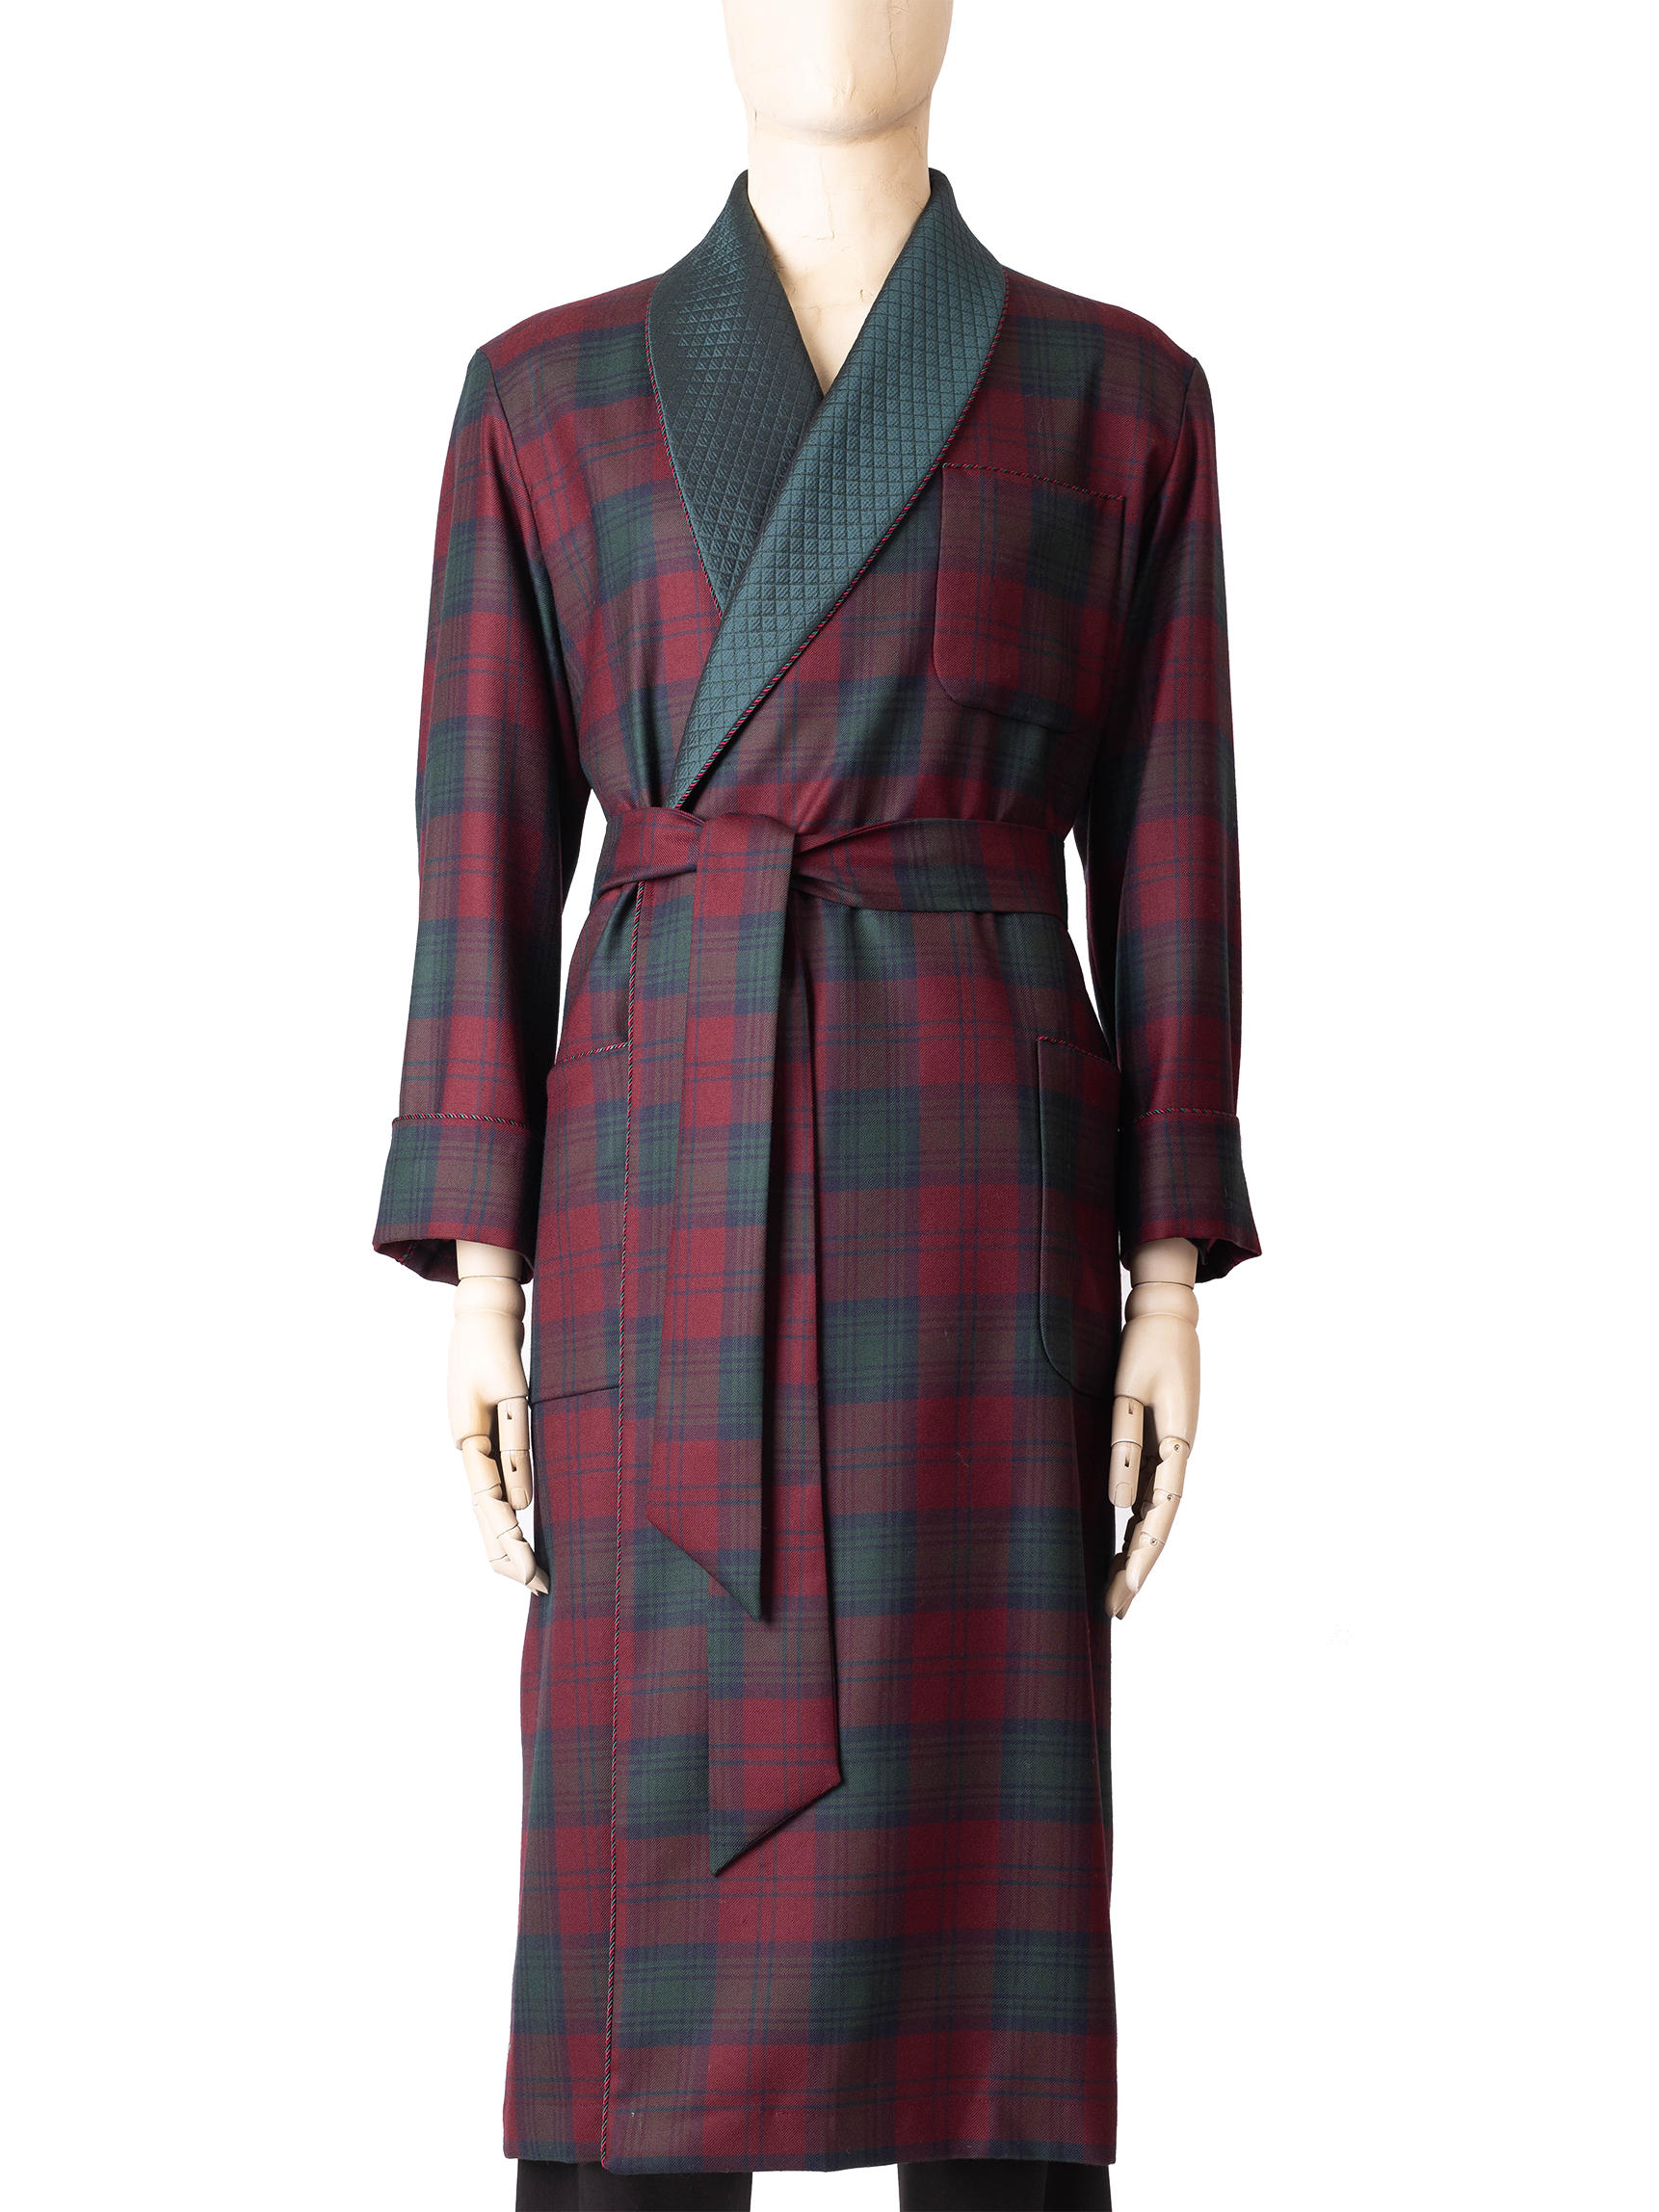 100% silk dressing gowns | Vintage inspired, floor length robes